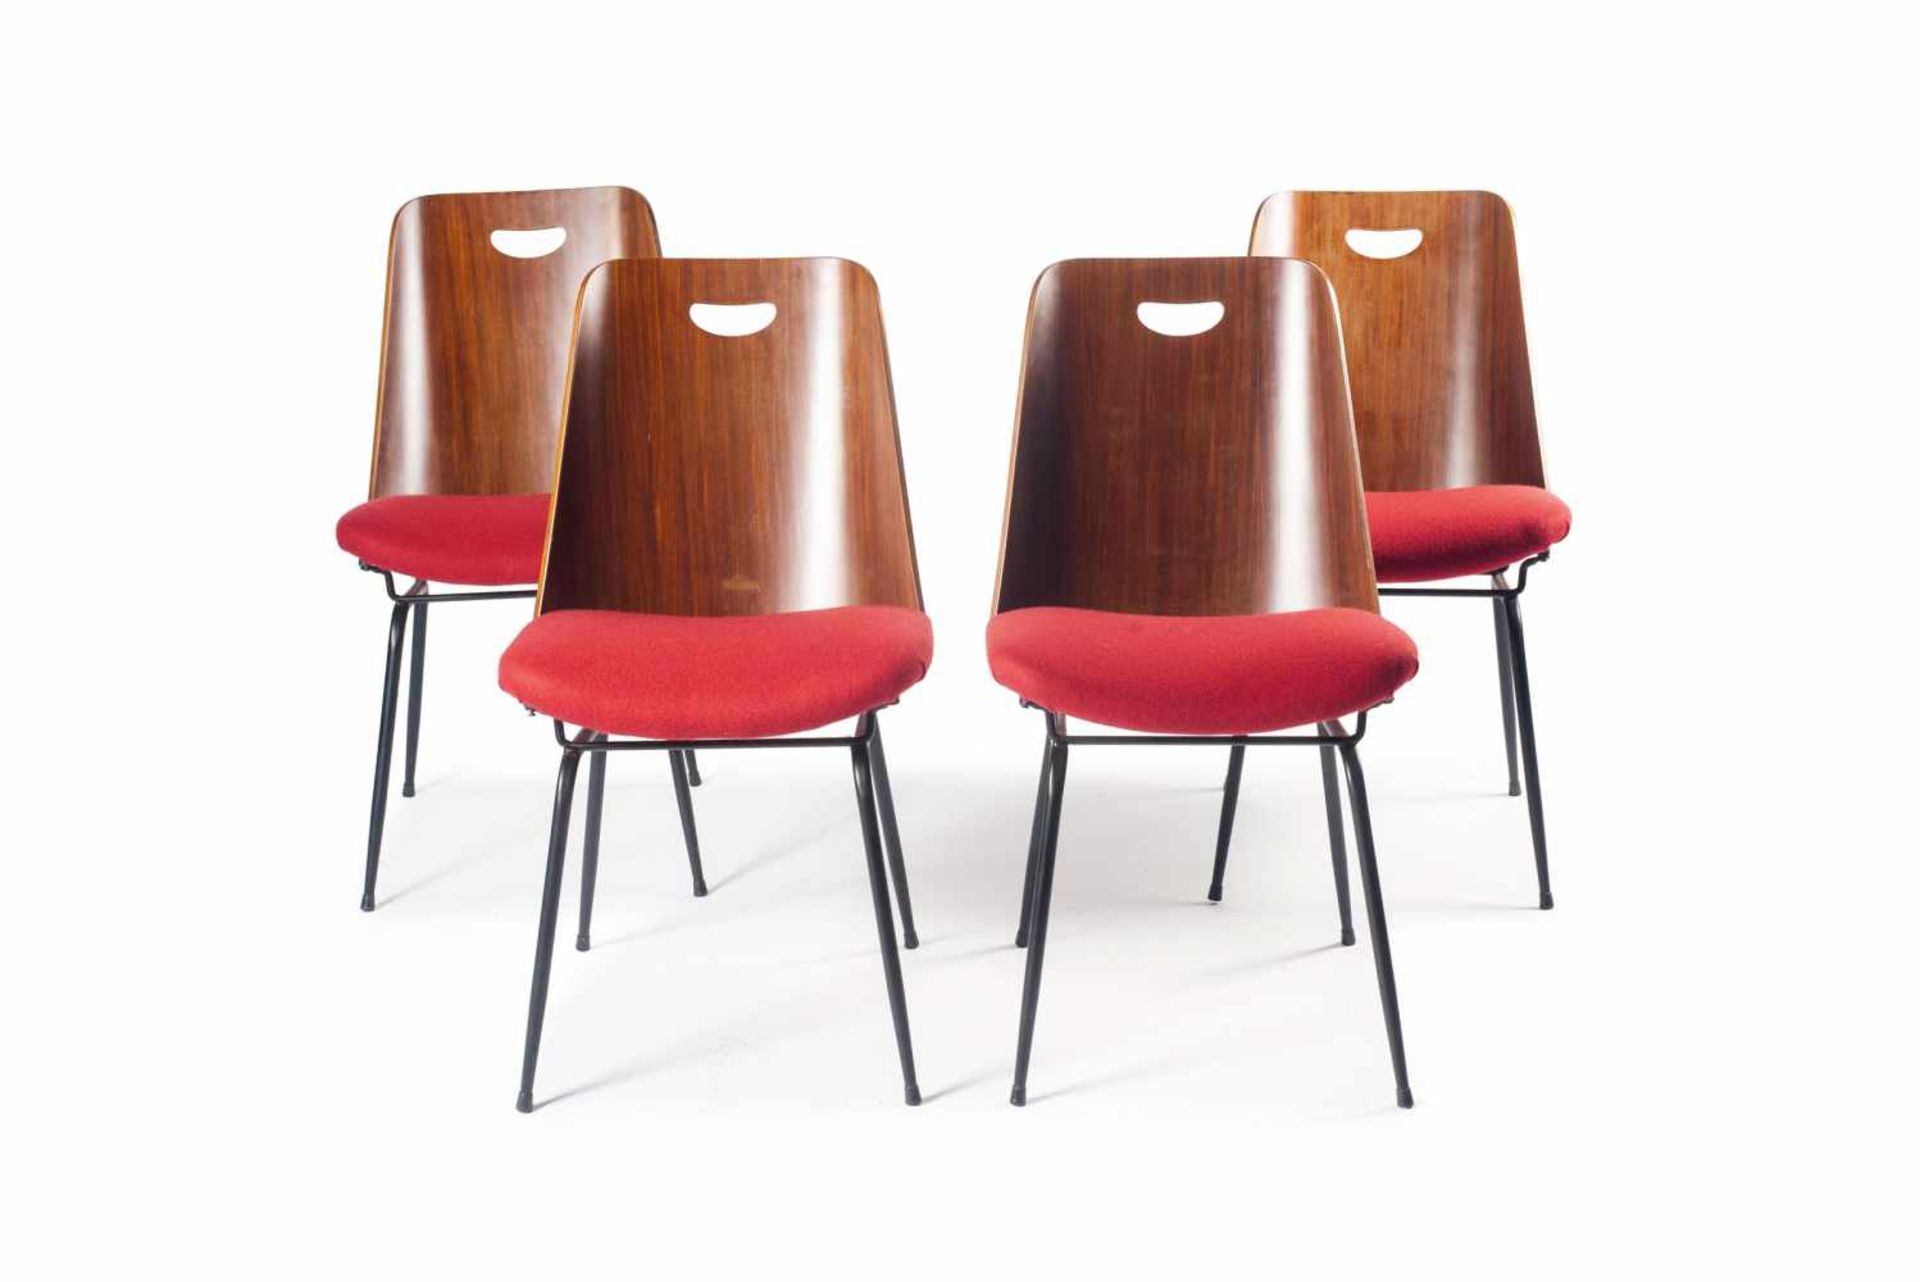 Vier Stühle 'Du 22', um 1952 Gastone Rinaldi H. 80 x 50 x 60 cm. Rima, Padua. Stahlrohr, schwarz